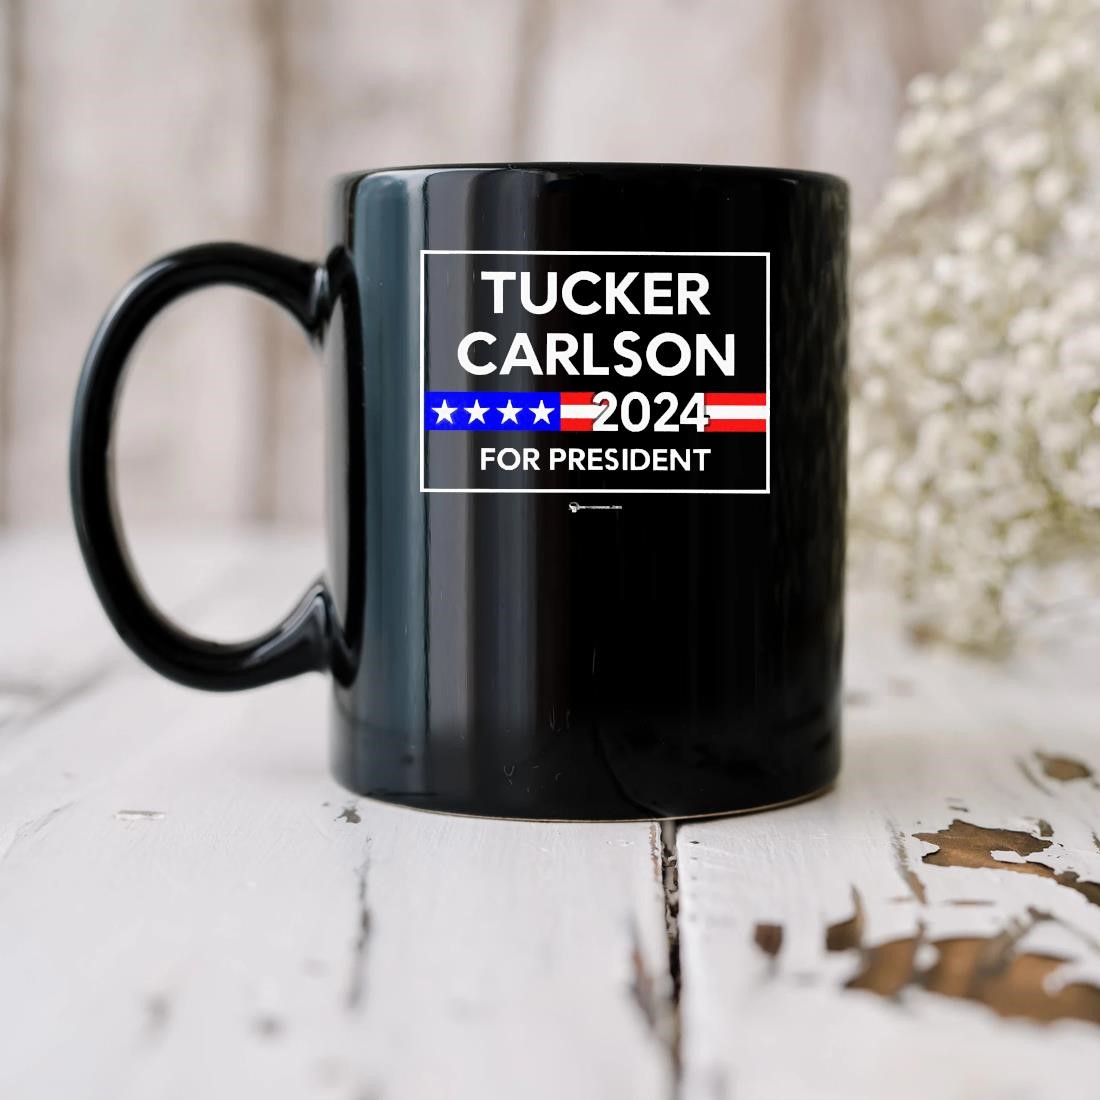 Tucker Carlson For President 2024 Mug biu.jpg